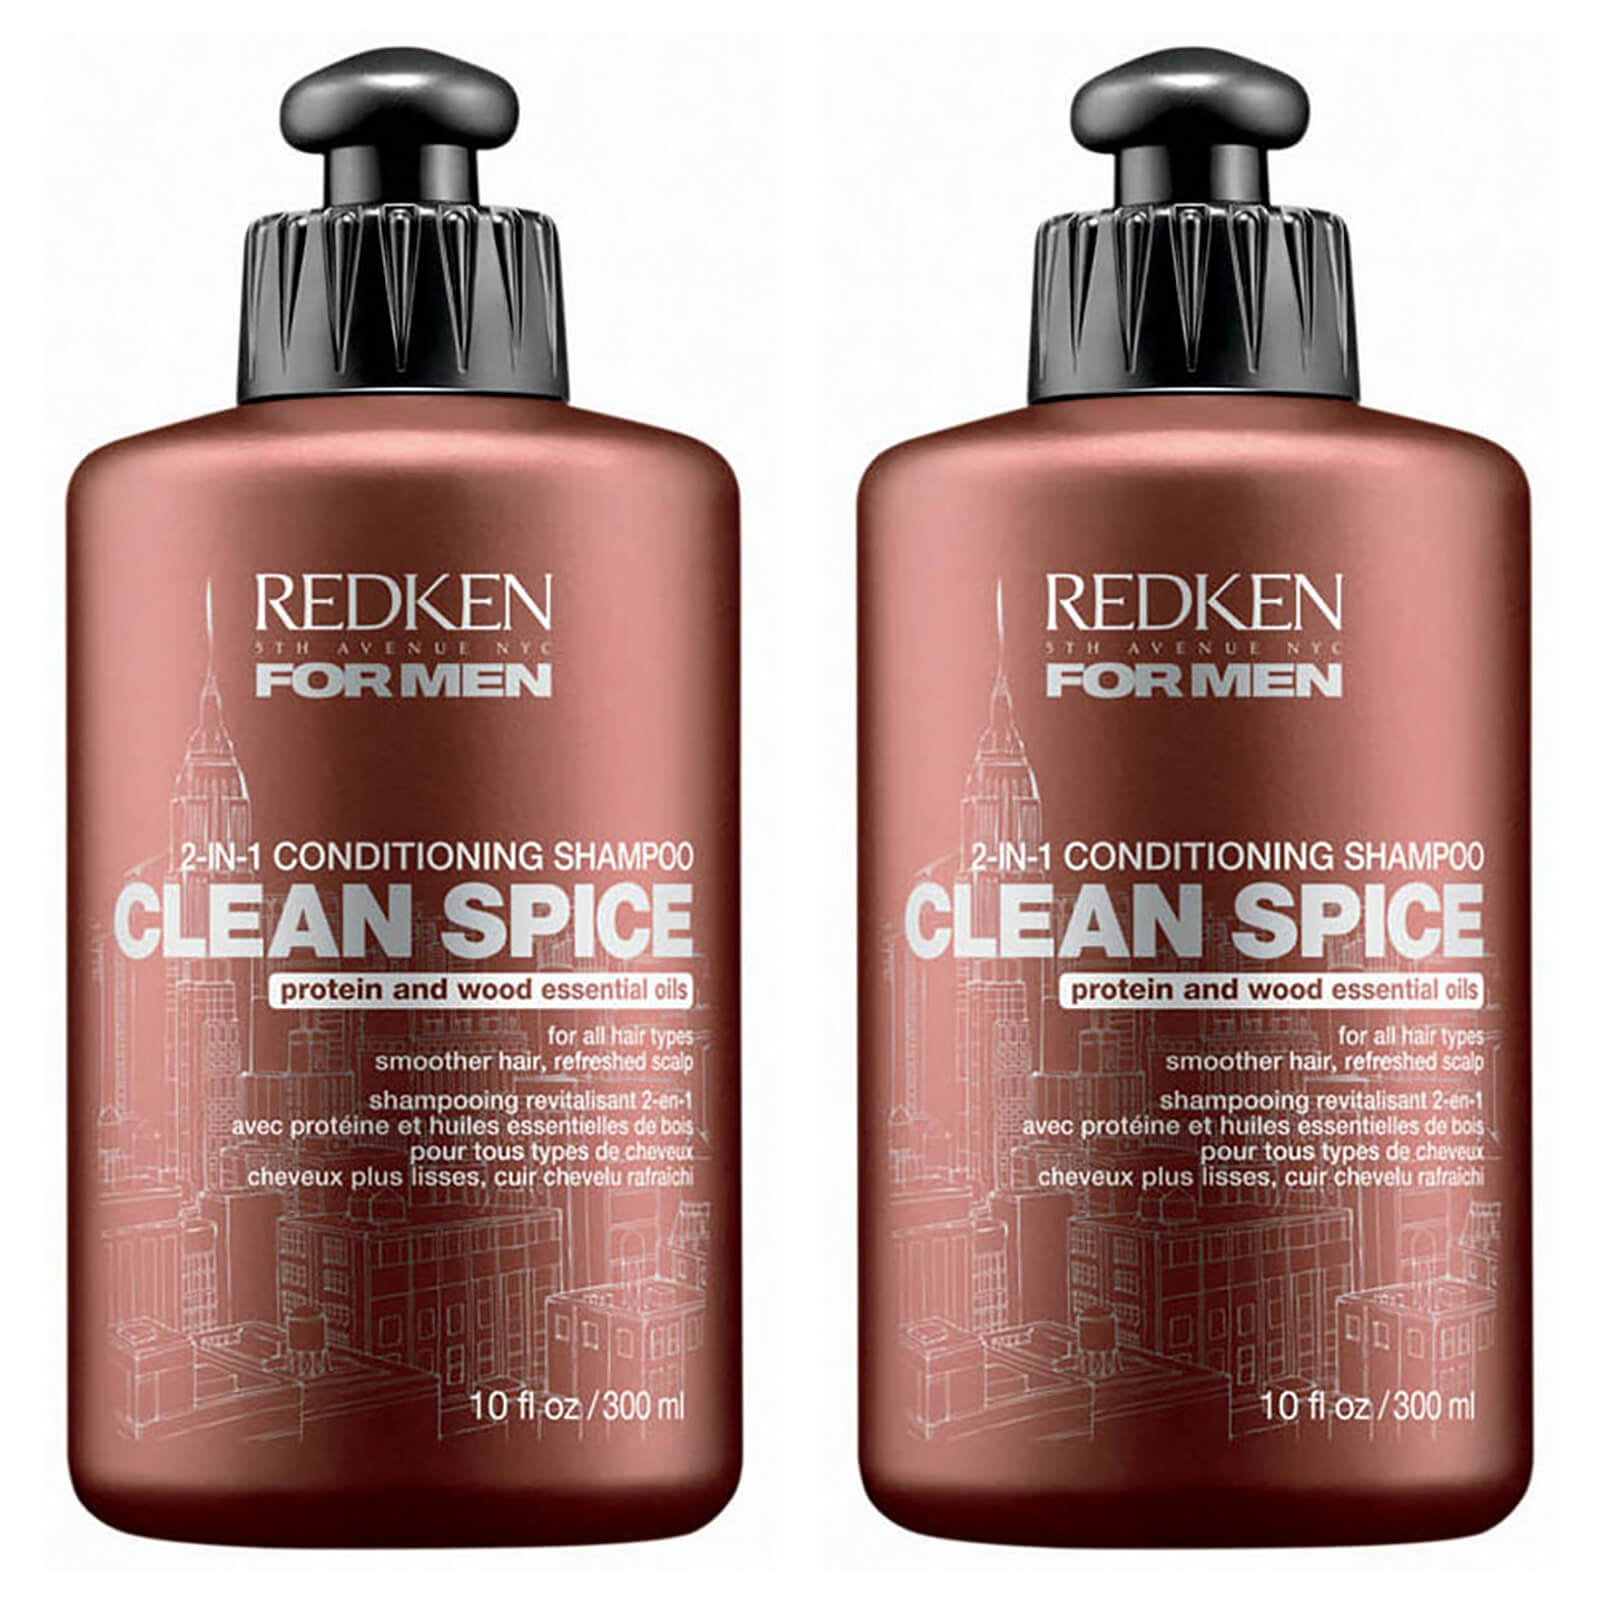 Redken For Men Clean Spice Duo (2 x 300ml)